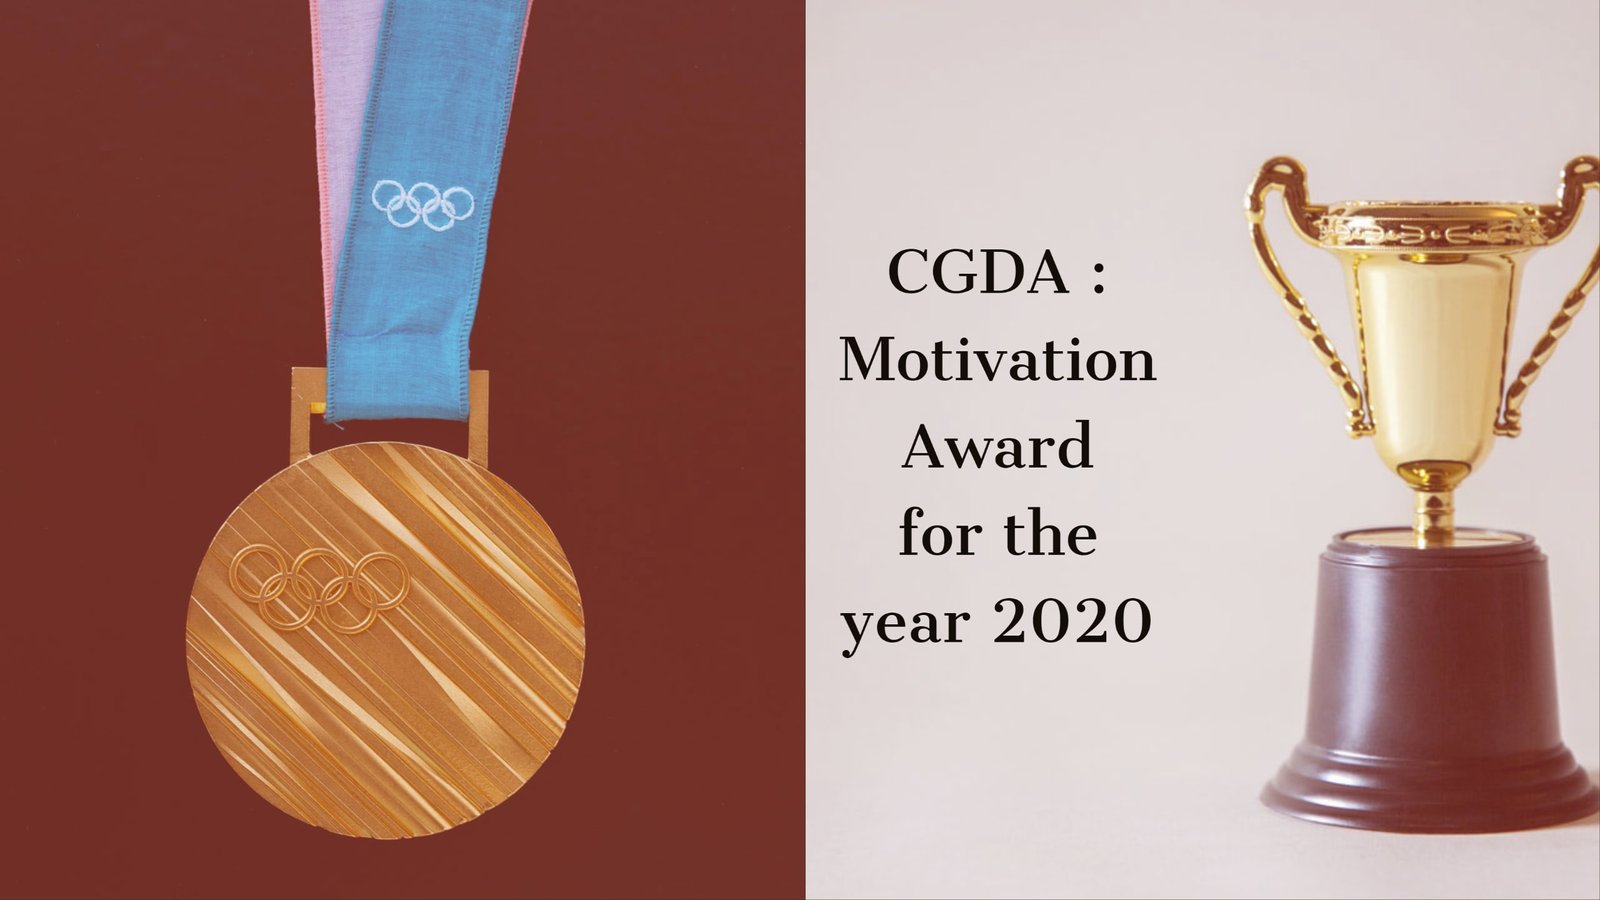 CGDA - Motivation Award for the year 2020